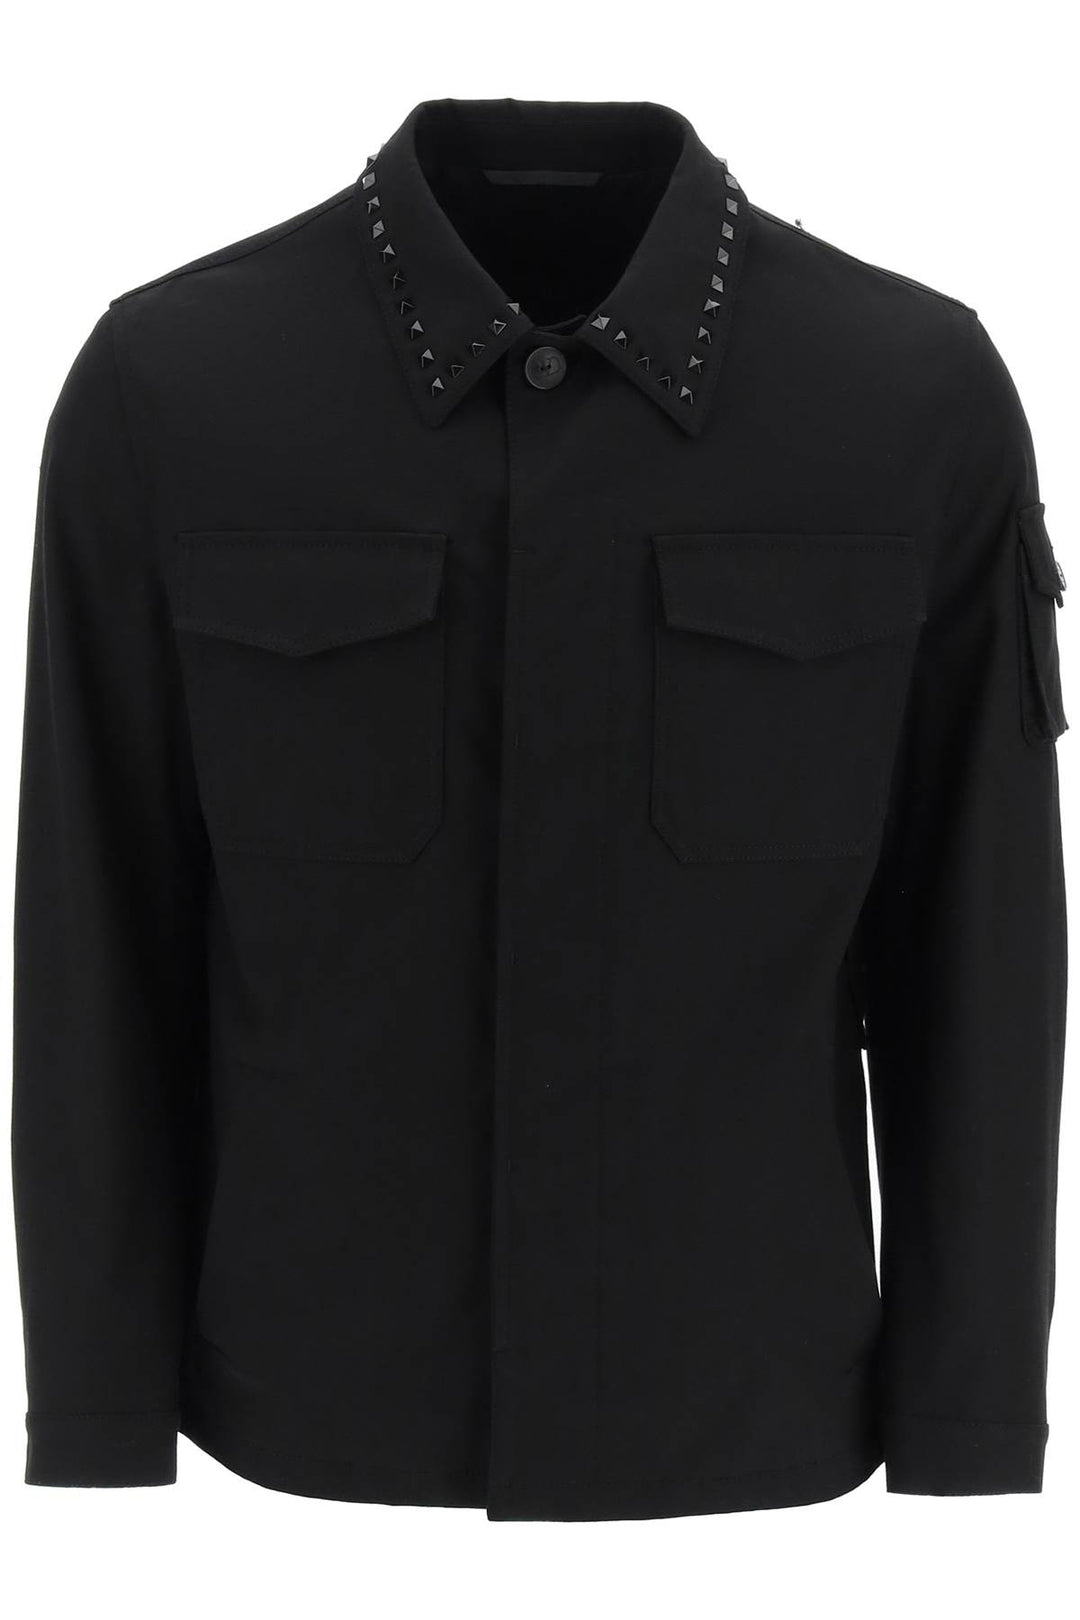 Valentino Black Untitled Studs Workwear Jacket   Nero